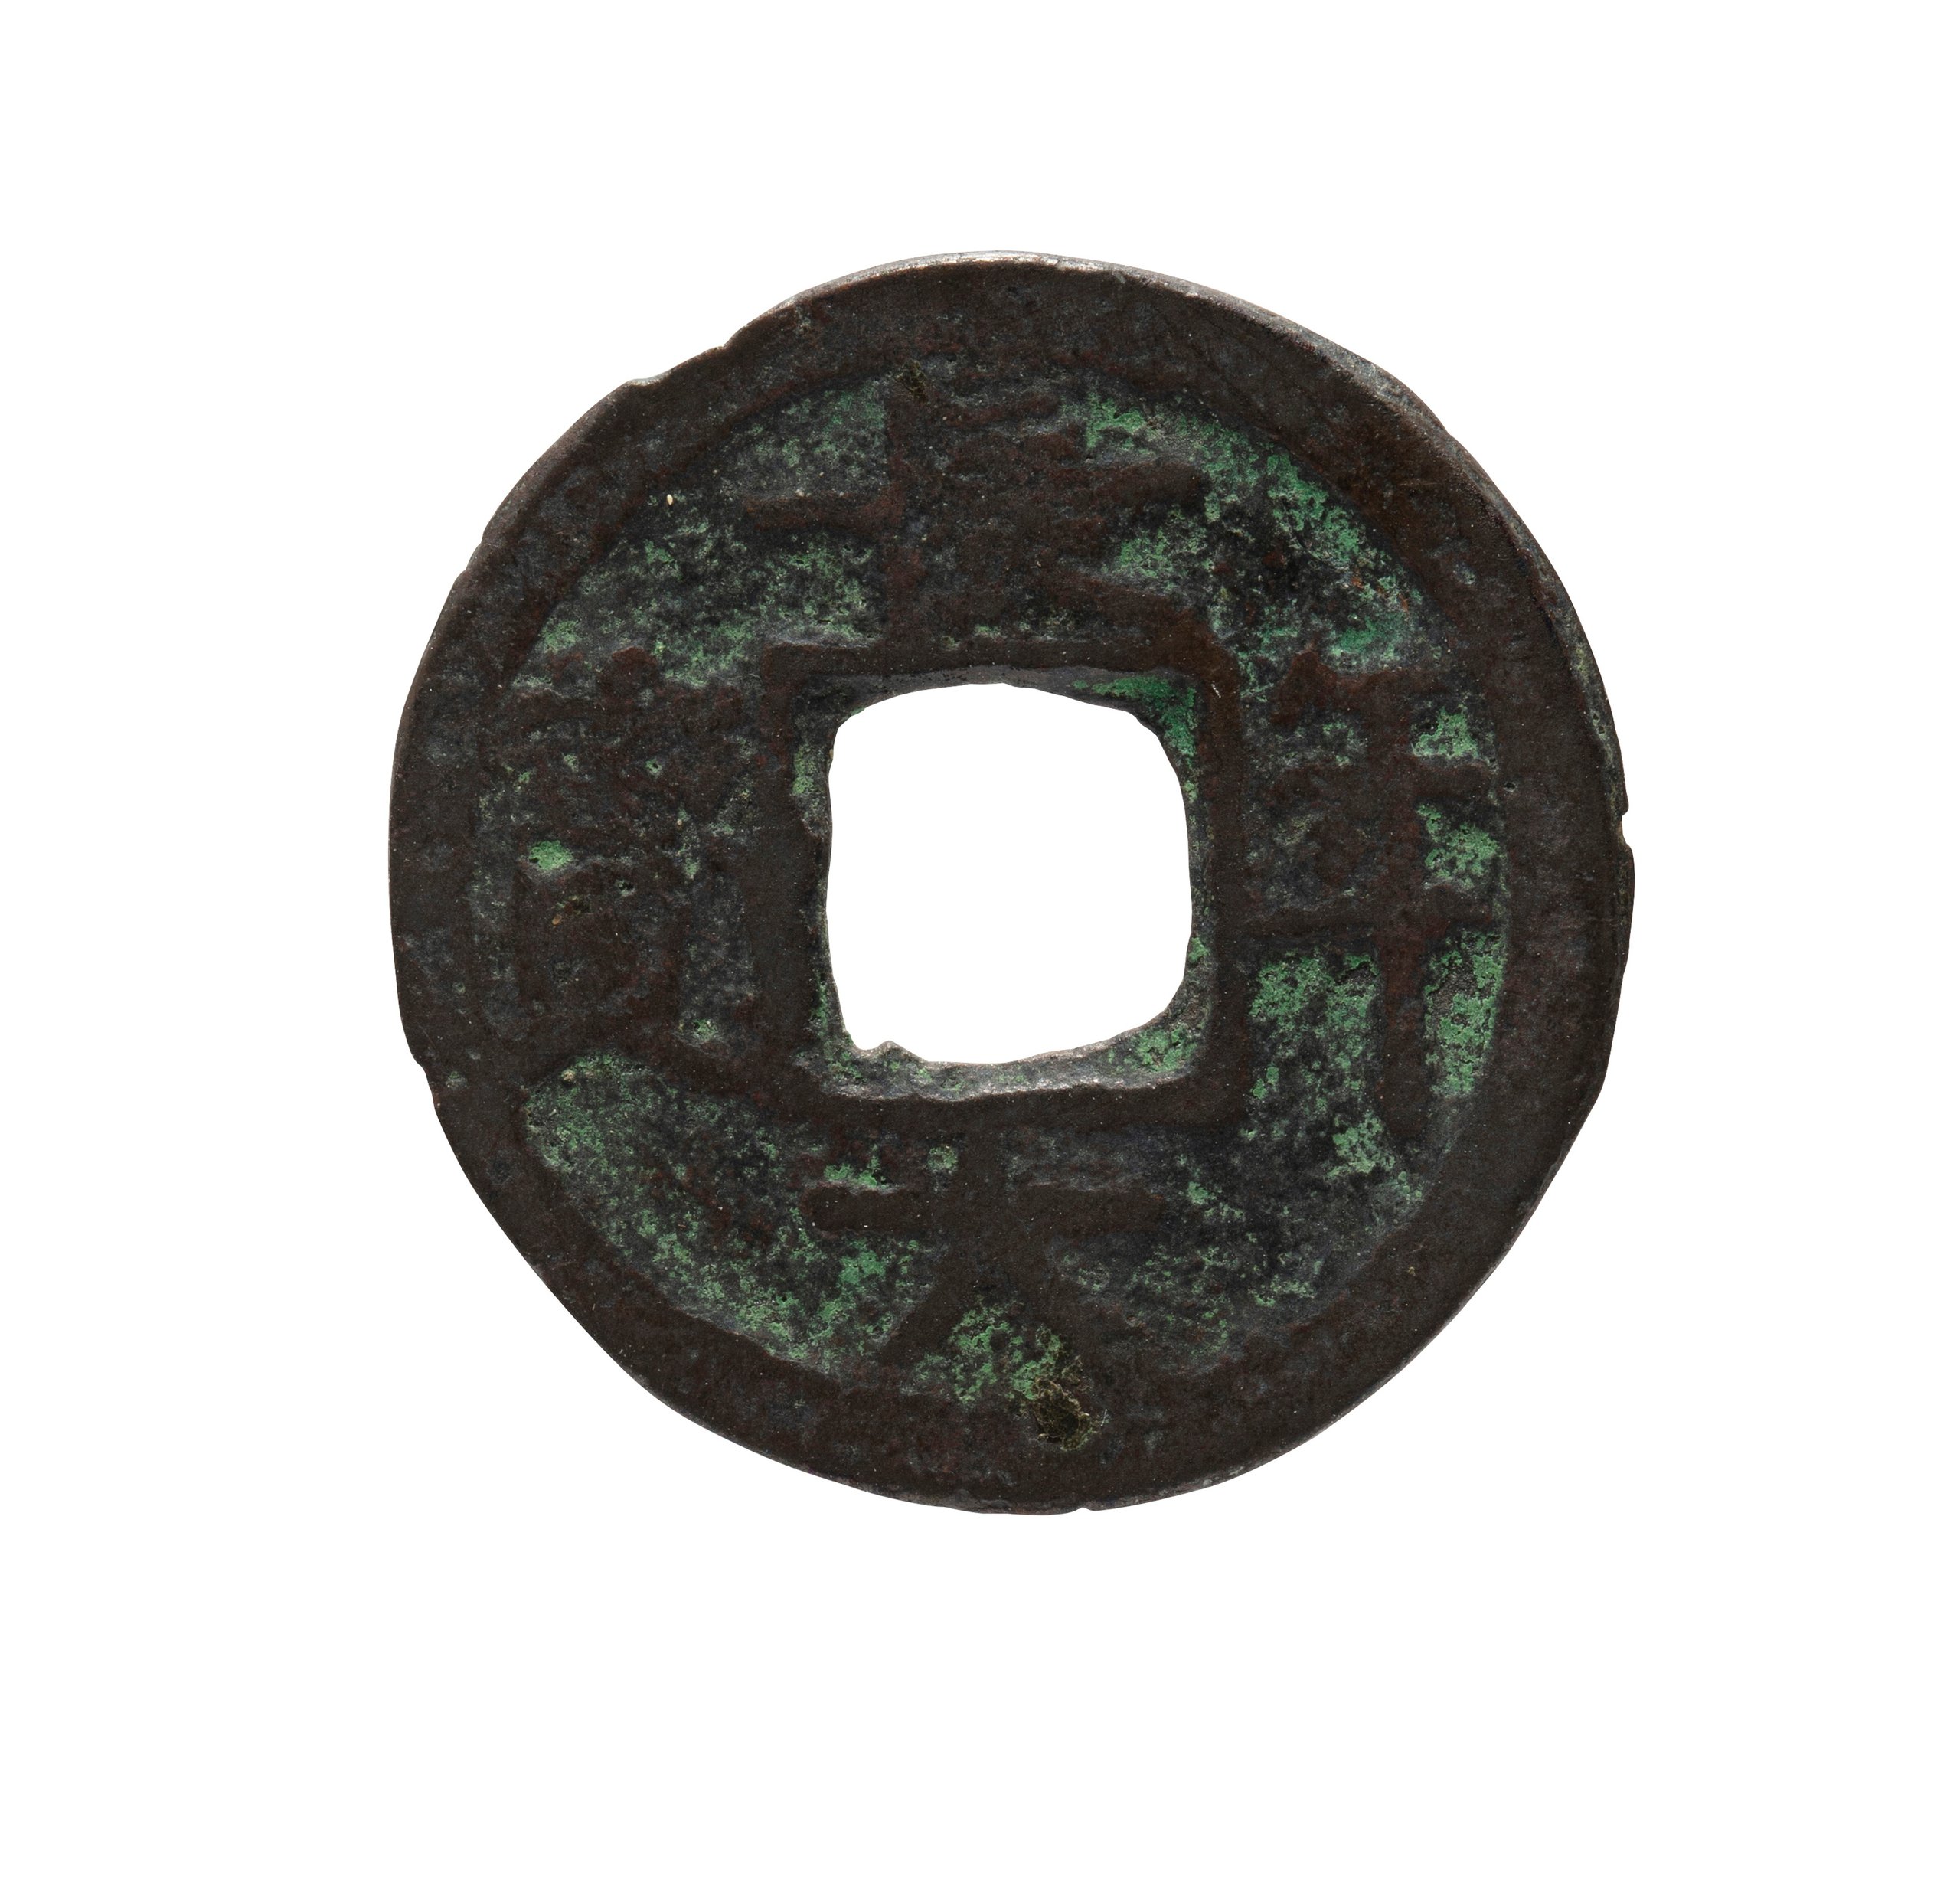 Yuan dynasty coin